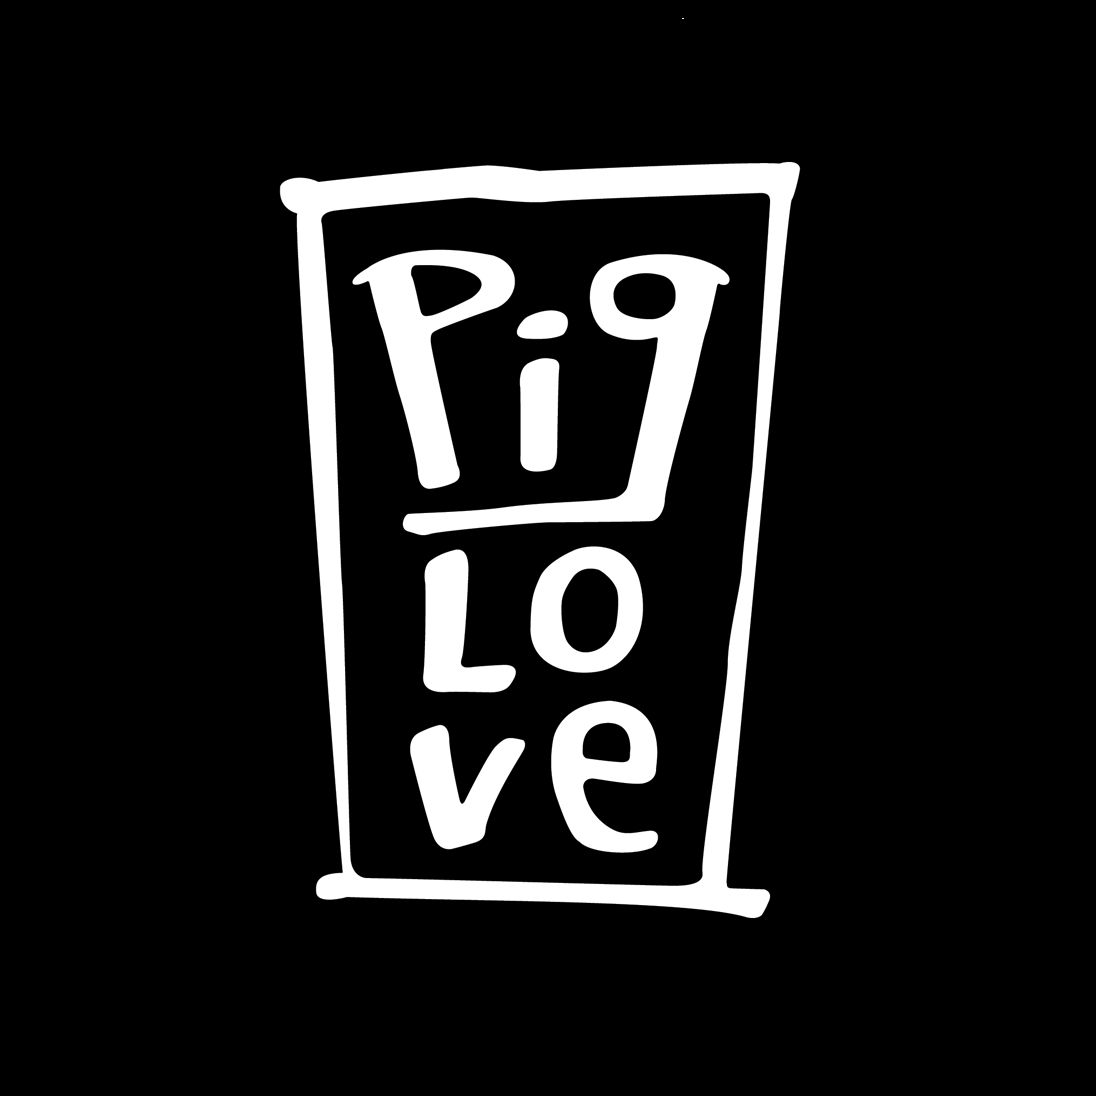 piglove logo (002).png